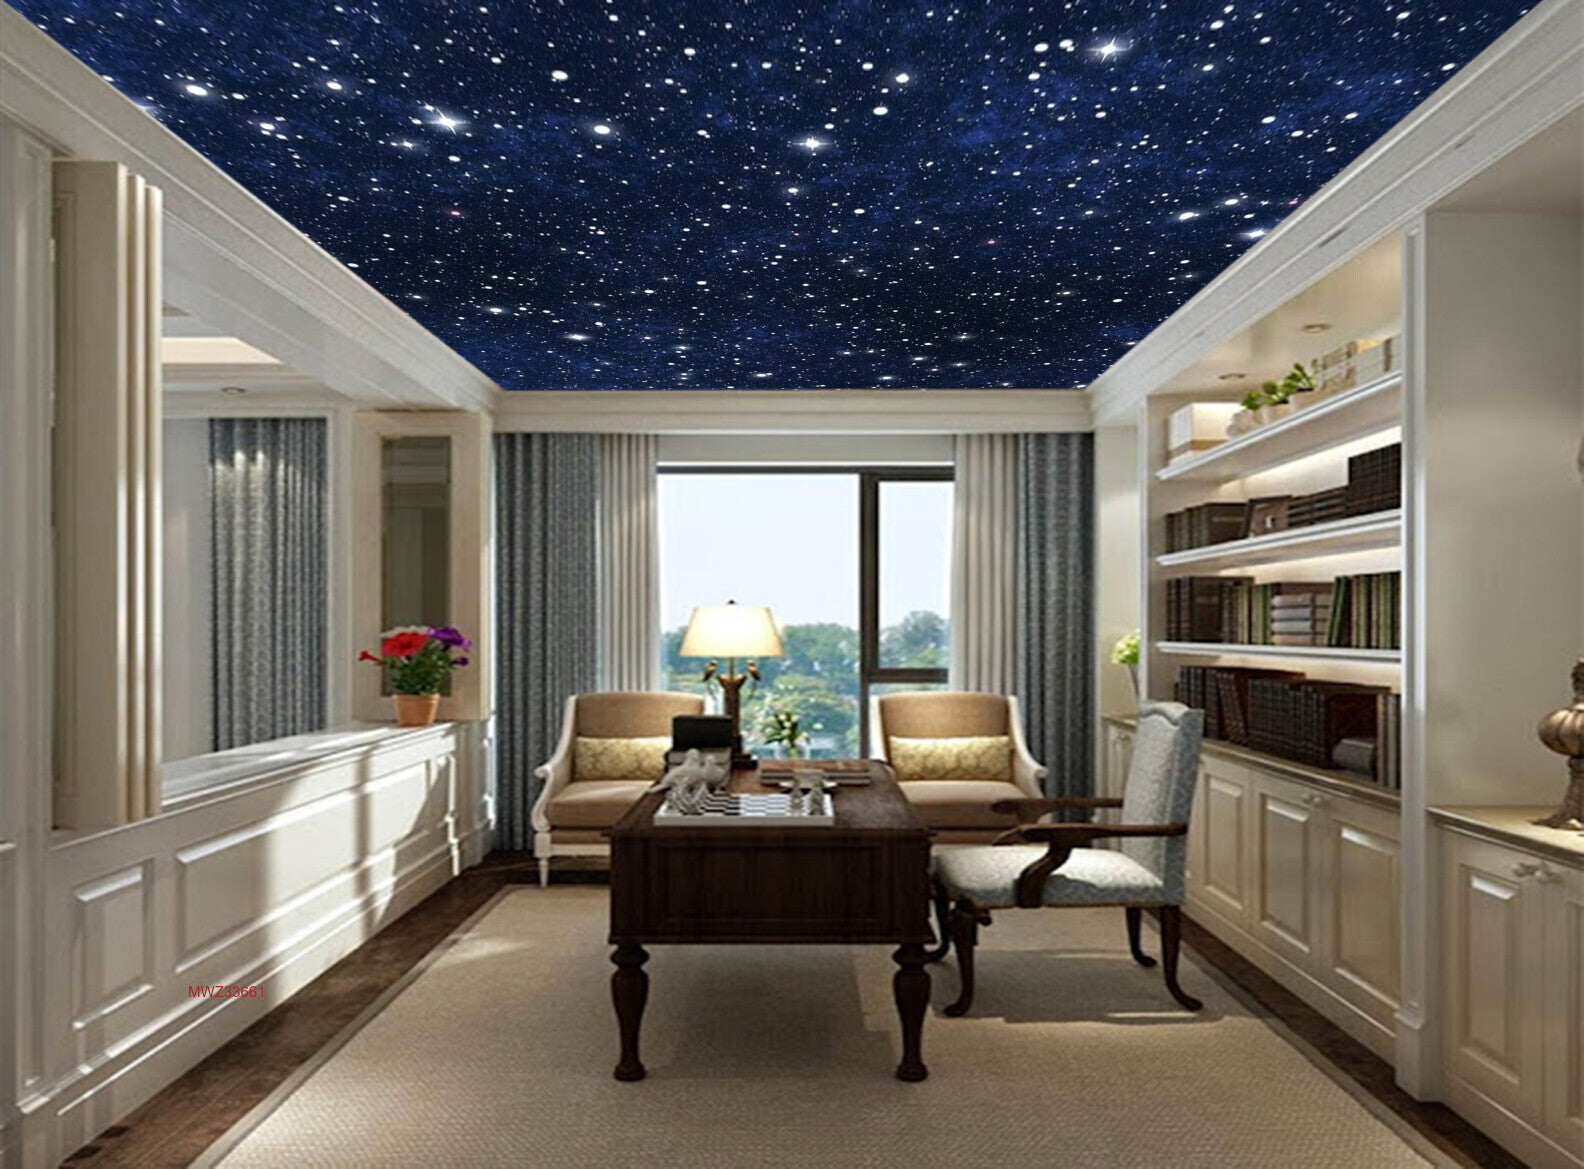 Avikalp MWZ3366 Blue Black Space Stars HD Wallpaper for Ceiling